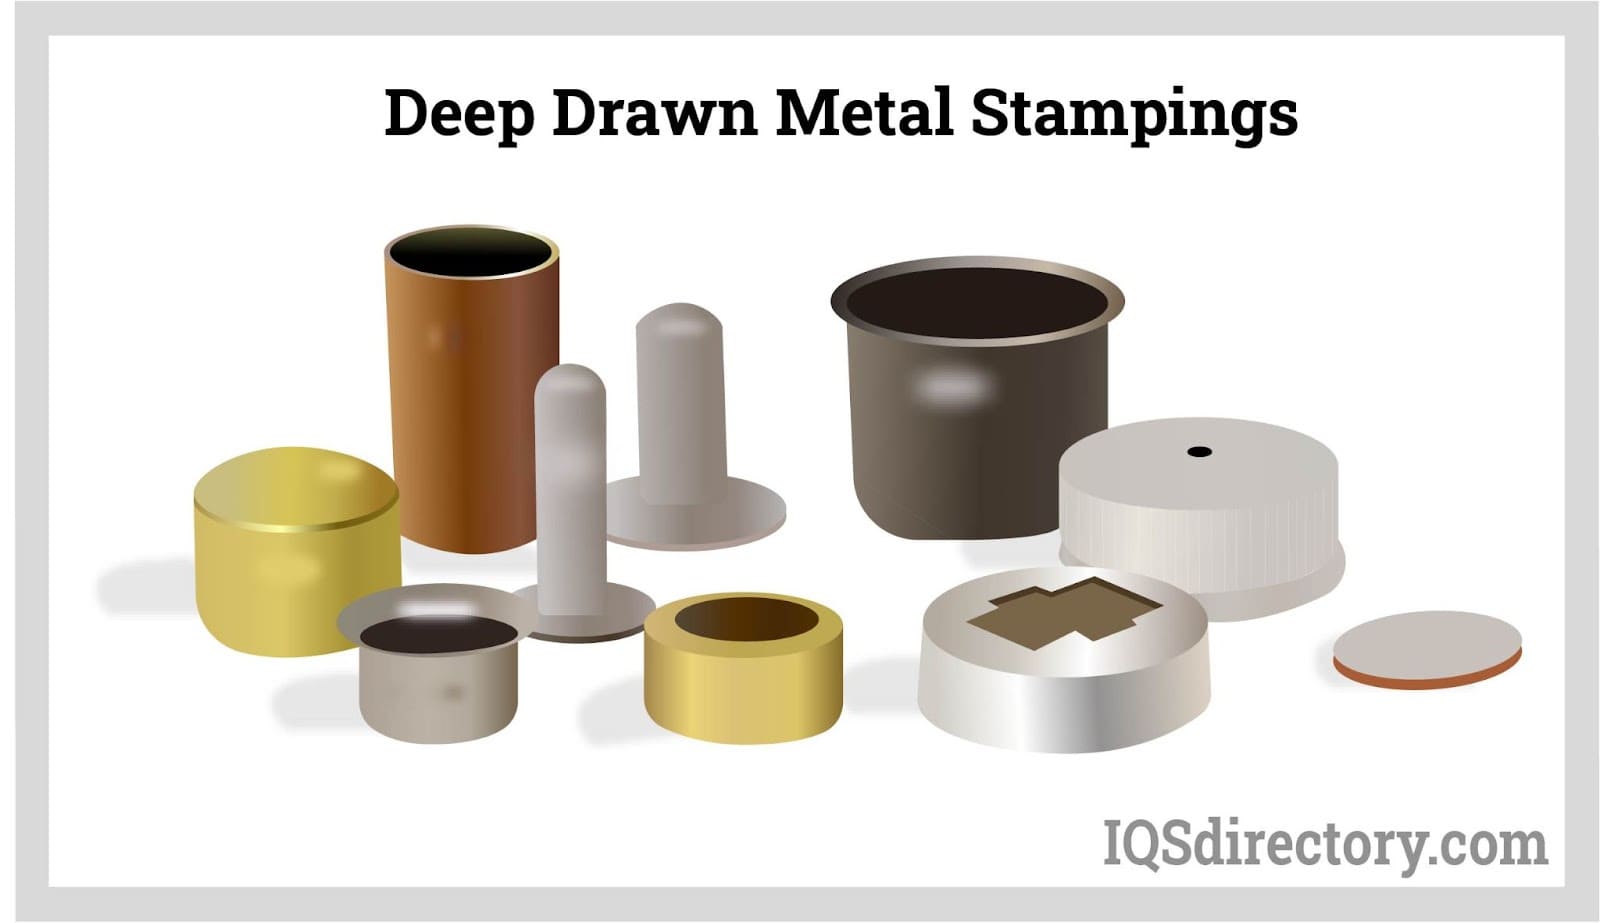 Deep Drawn Metal Stampings